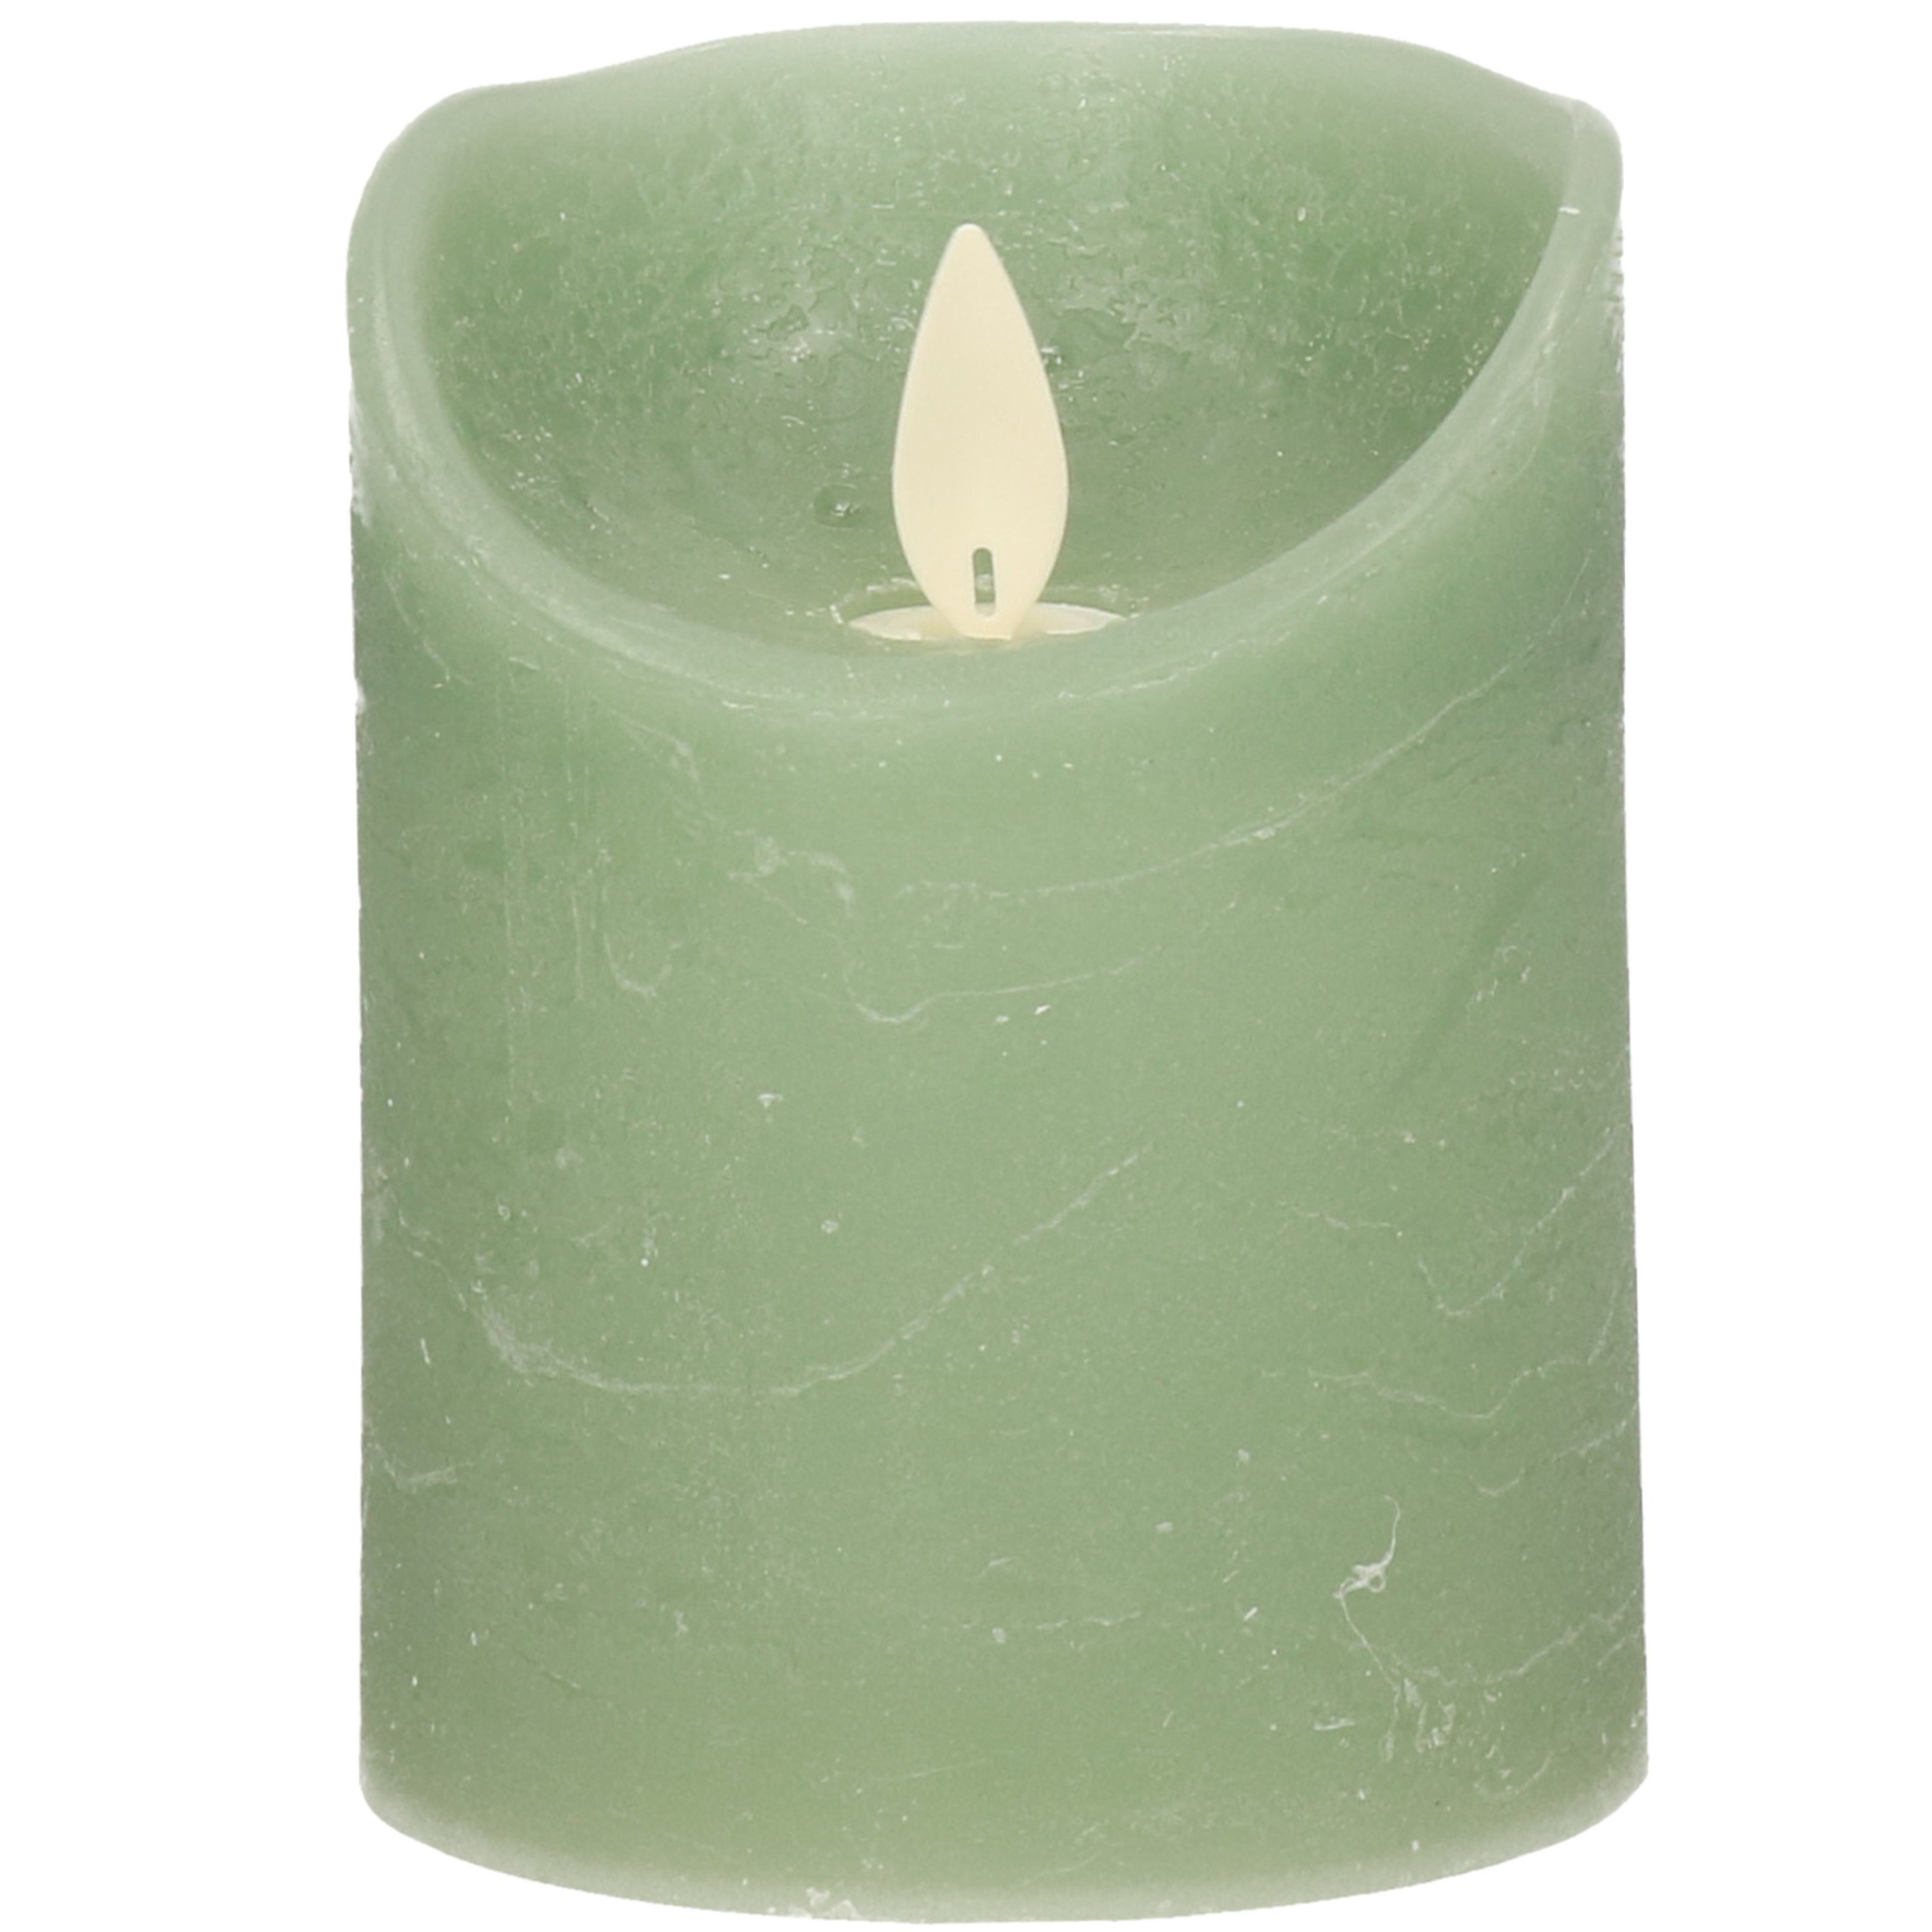 1x Jade groene LED kaarsen-stompkaarsen met bewegende vlam 10 cm